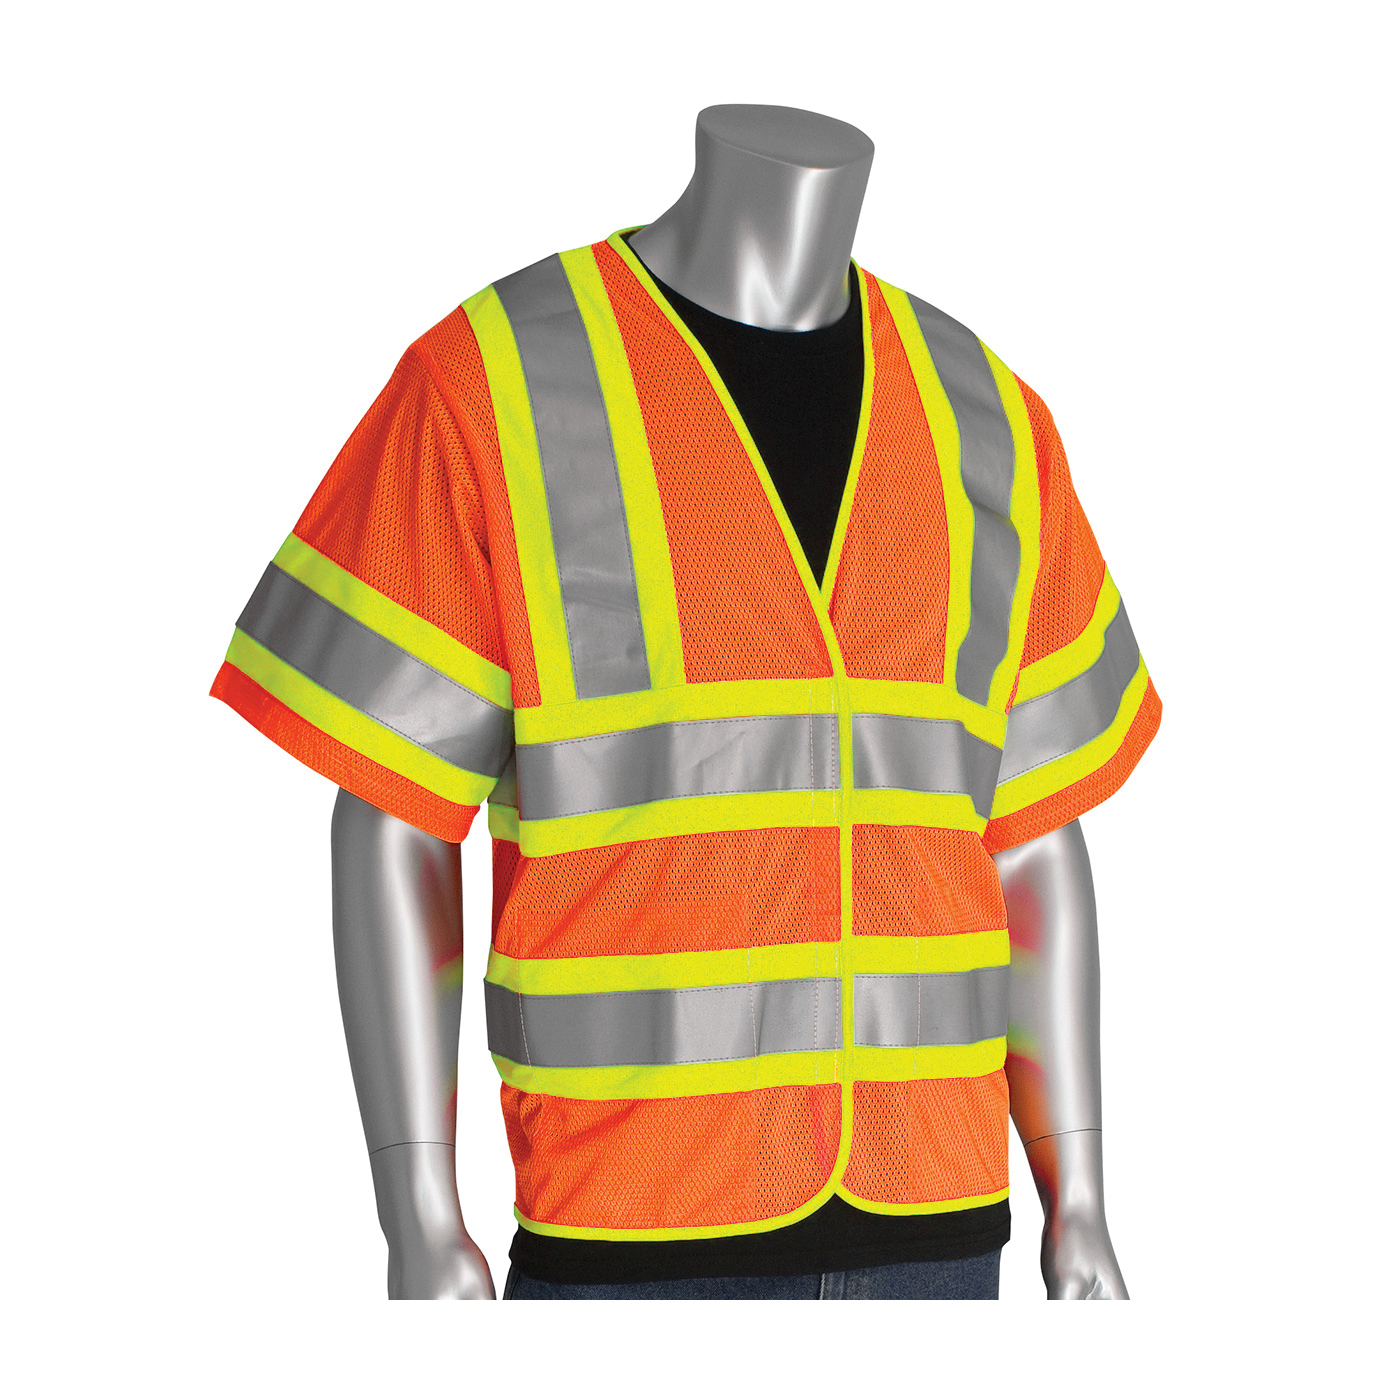 PIP® SafetyGear 305-HSVPFROR-2X/3X 2-Tone FR Treated Safety Vest, 2XL/3XL, Hi-Viz Orange, Polyester, Hook and Loop Closure, 2 Pockets, ANSI Class: Class 3, Specifications Met: ANSI Specified